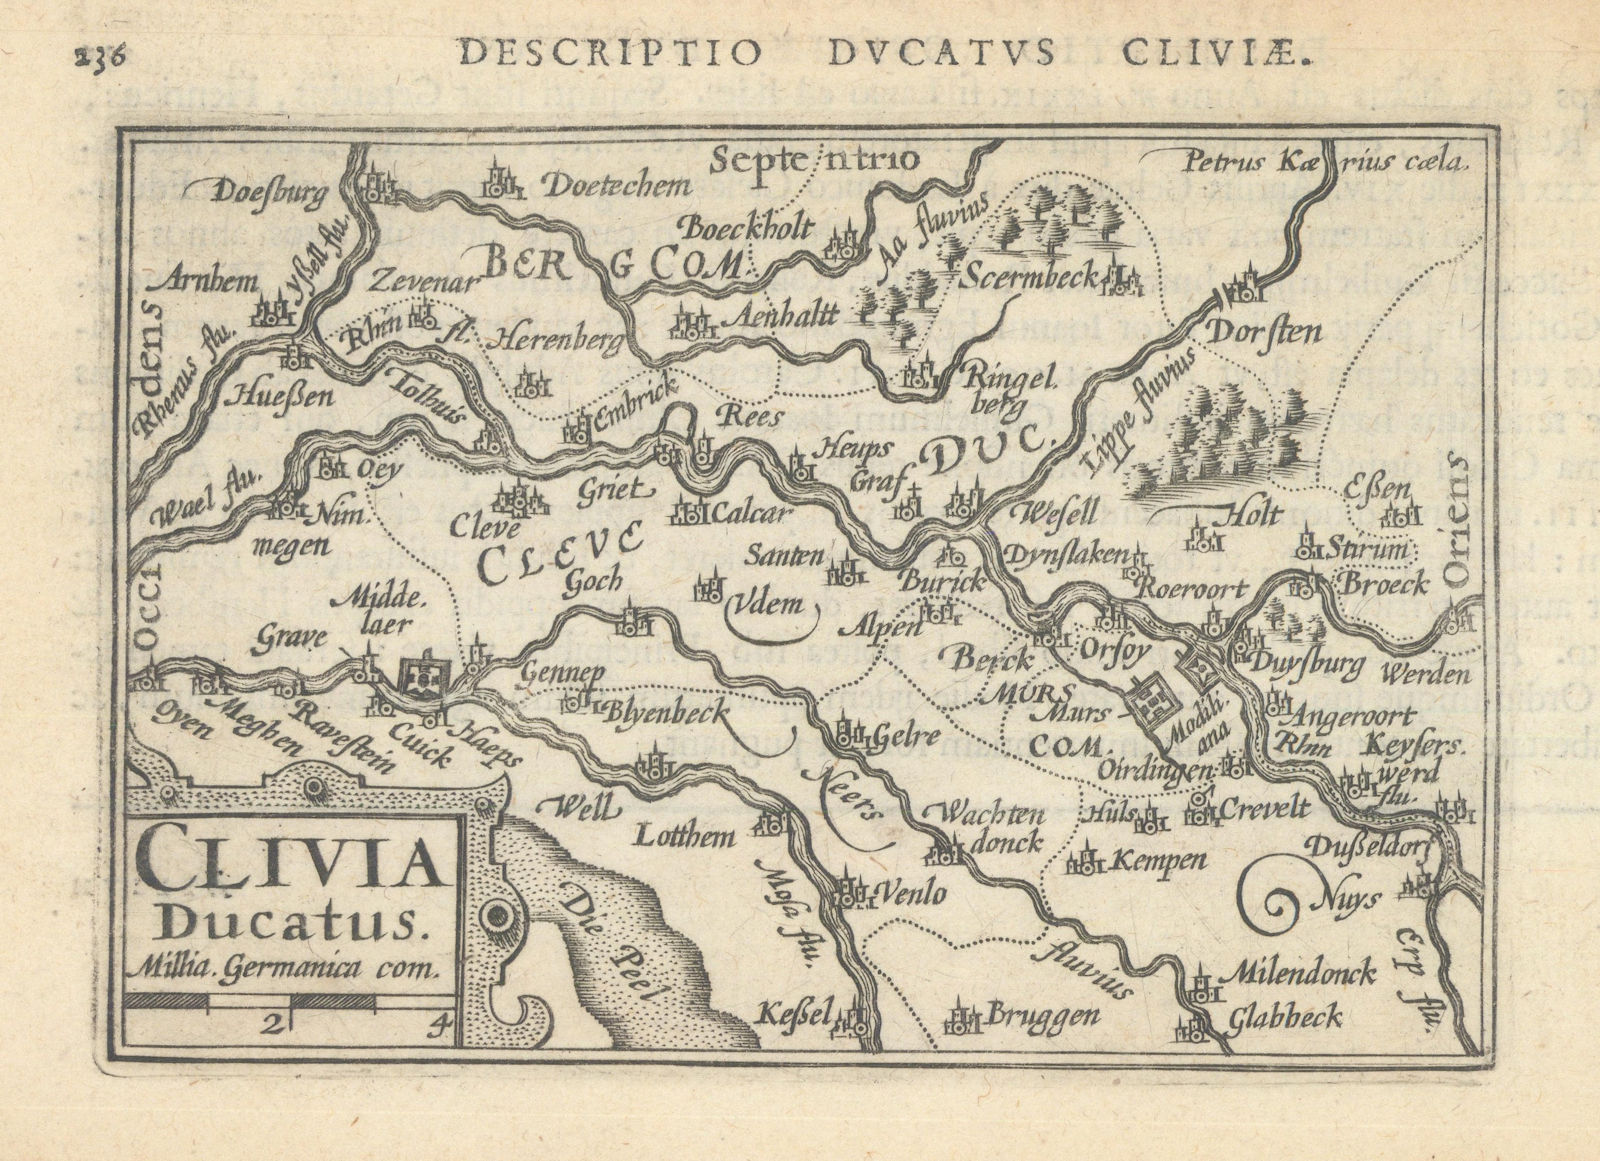 Clivia Ducatus by Bertius / Langenes. Duchy of Cleves / Herzogtum Kleve 1603 map